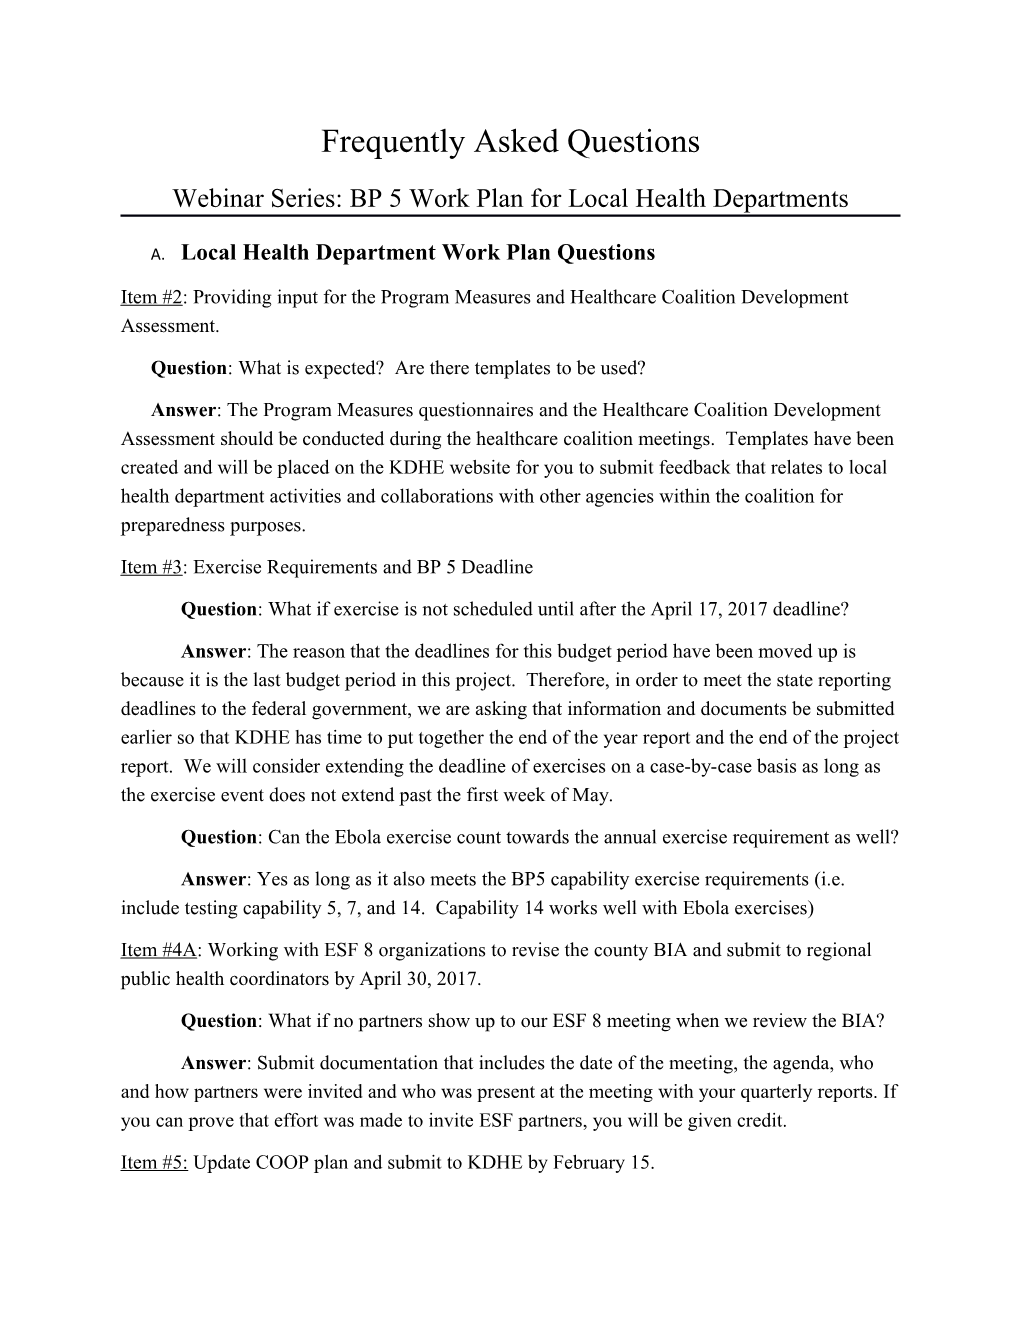 Webinar Series: BP 5 Work Plan for Local Health Departments